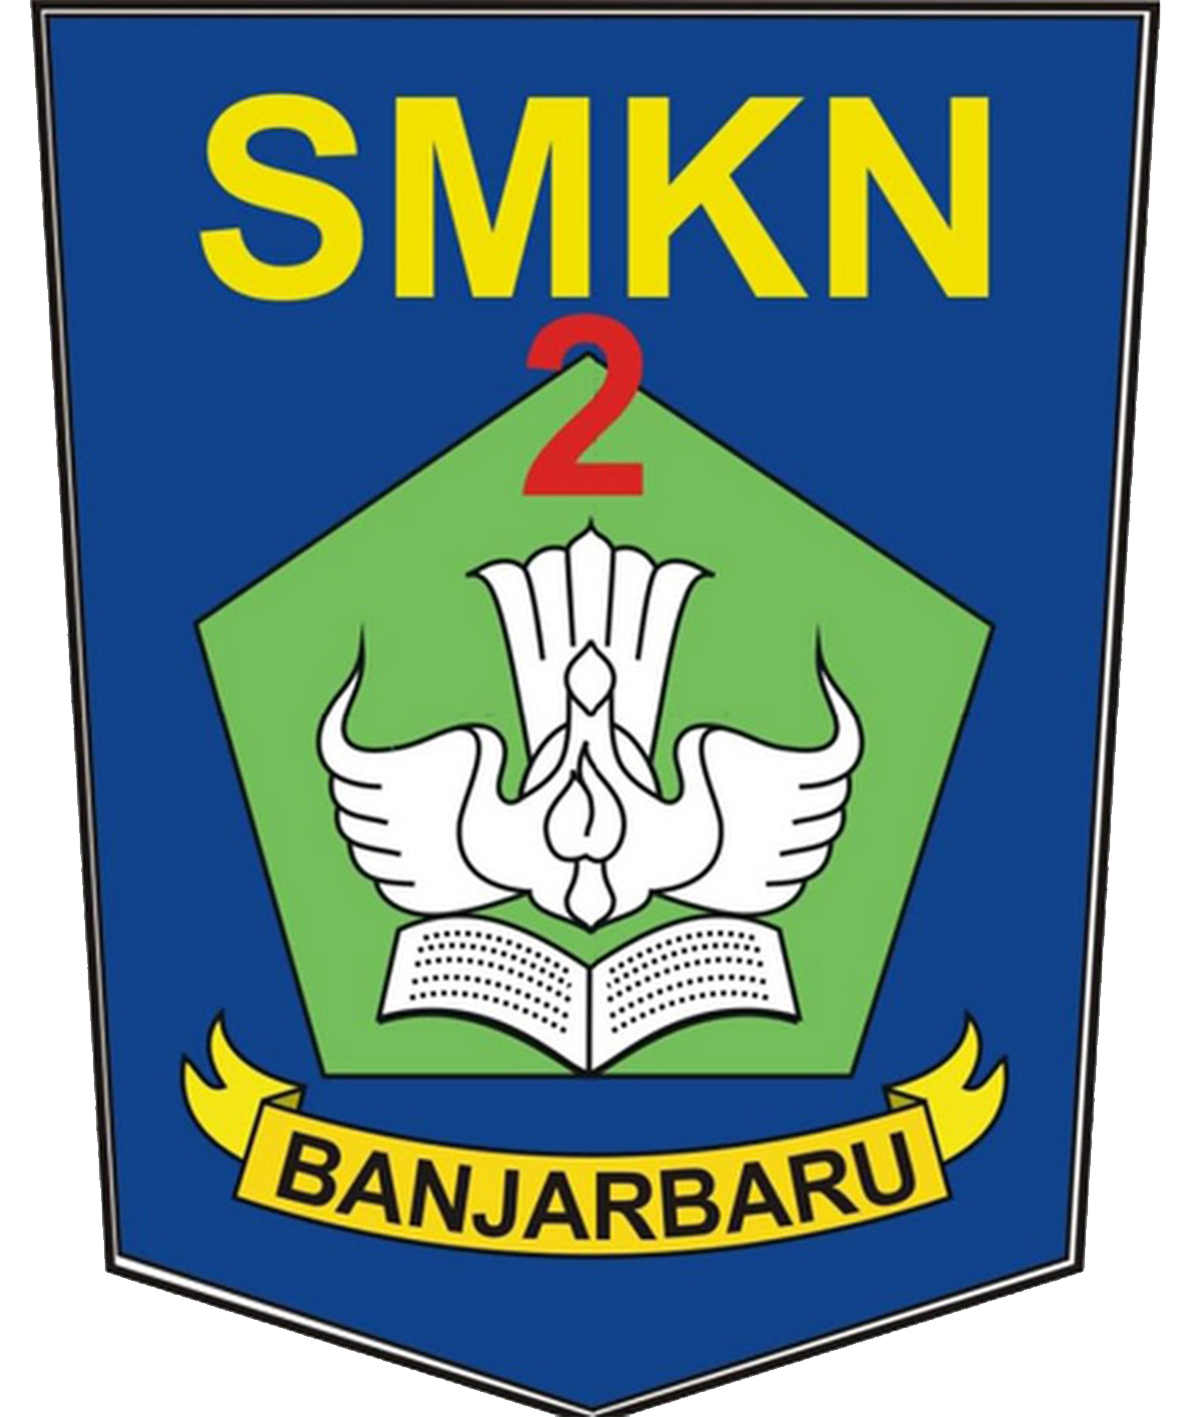 SMKN 2 Banjarbaru